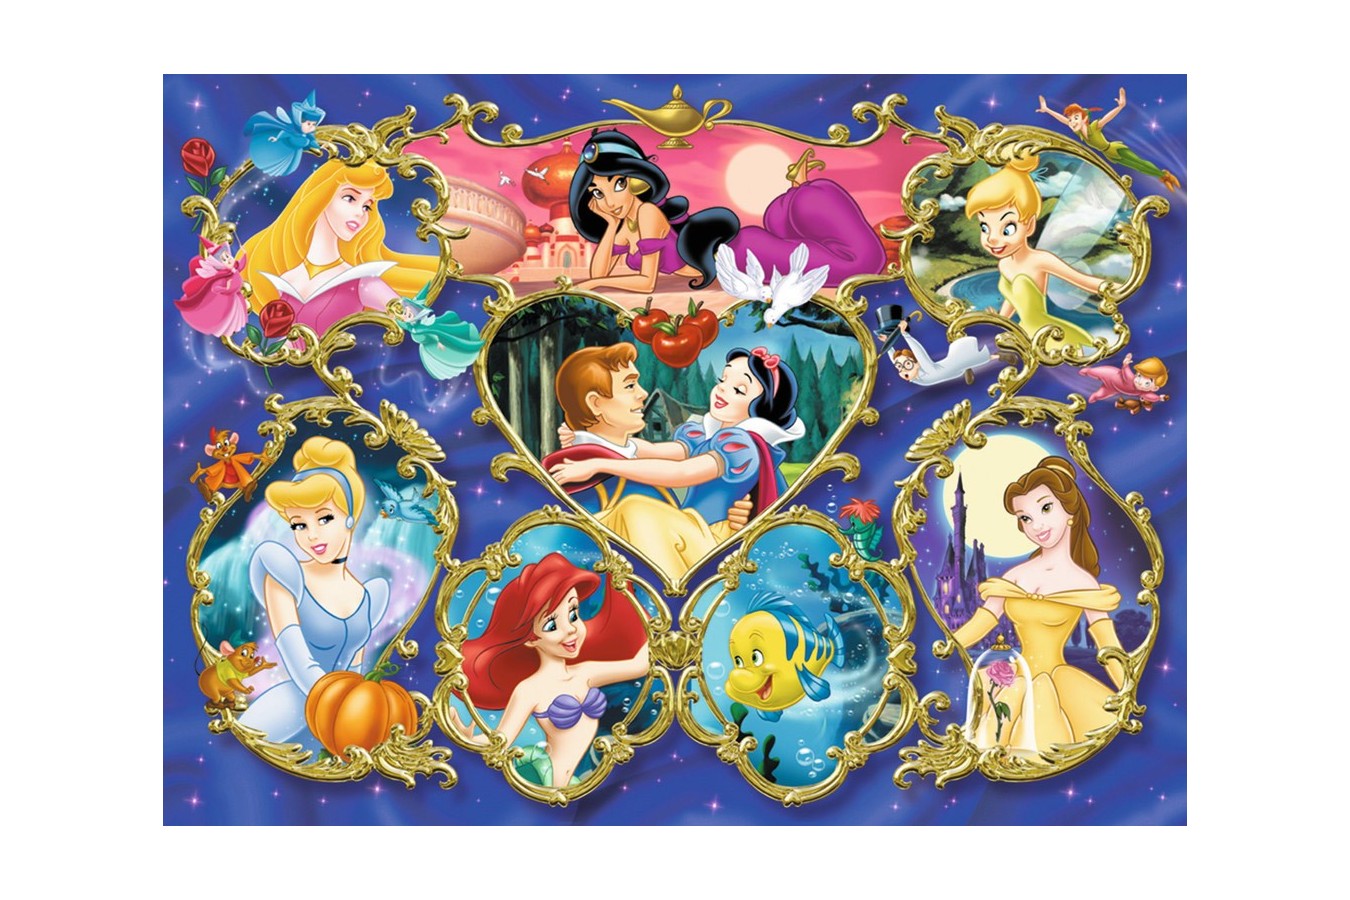 Puzzle Ravensburger - Printesele Disney, 300 piese (13108)